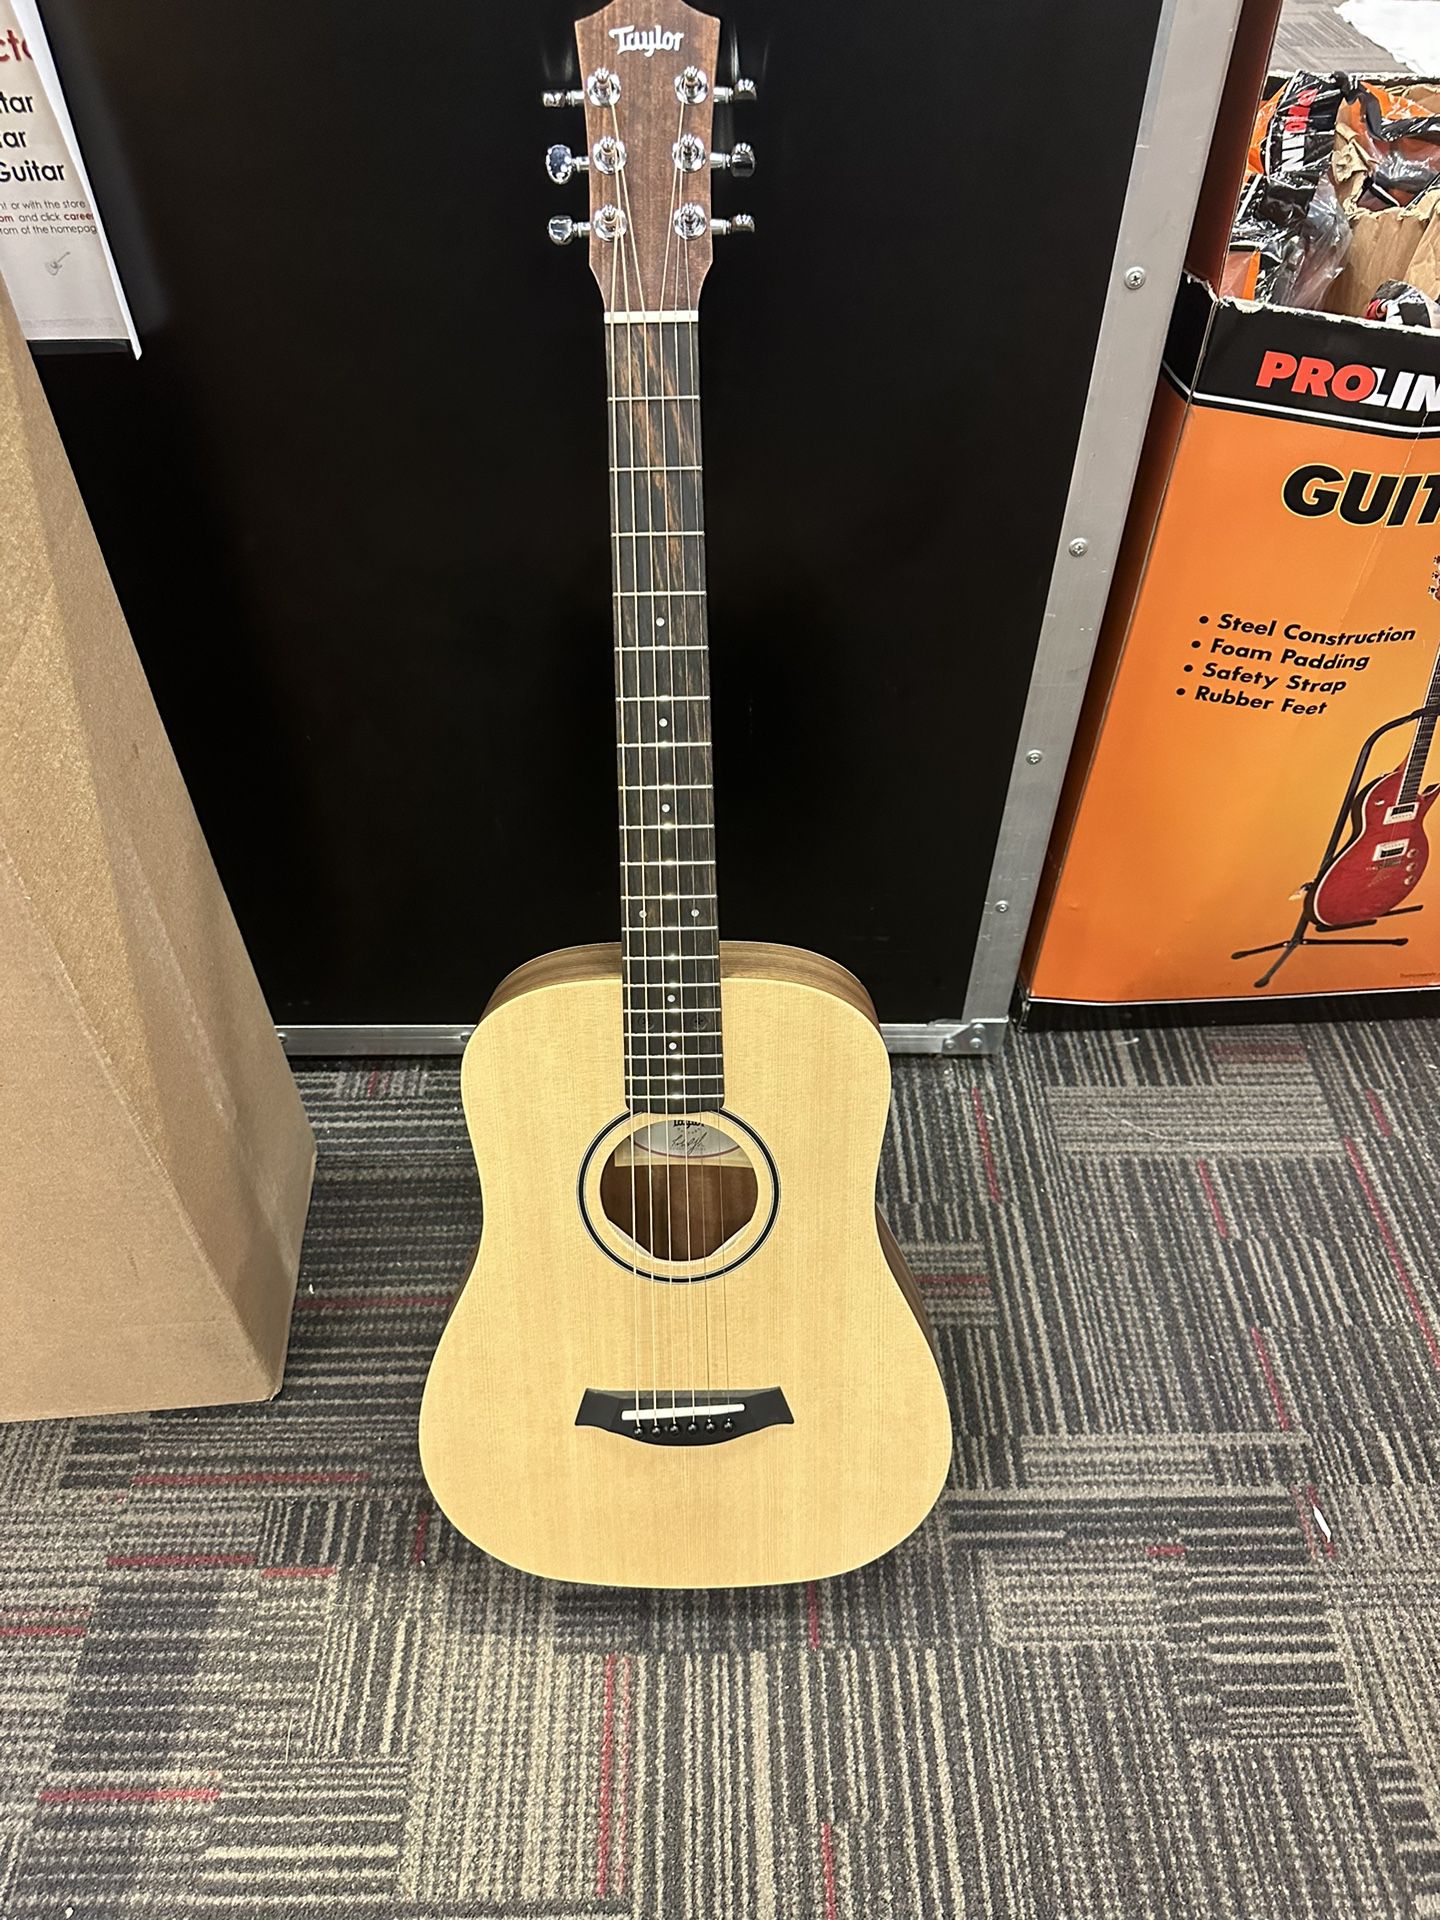 Brand New Guitar (Taylor)